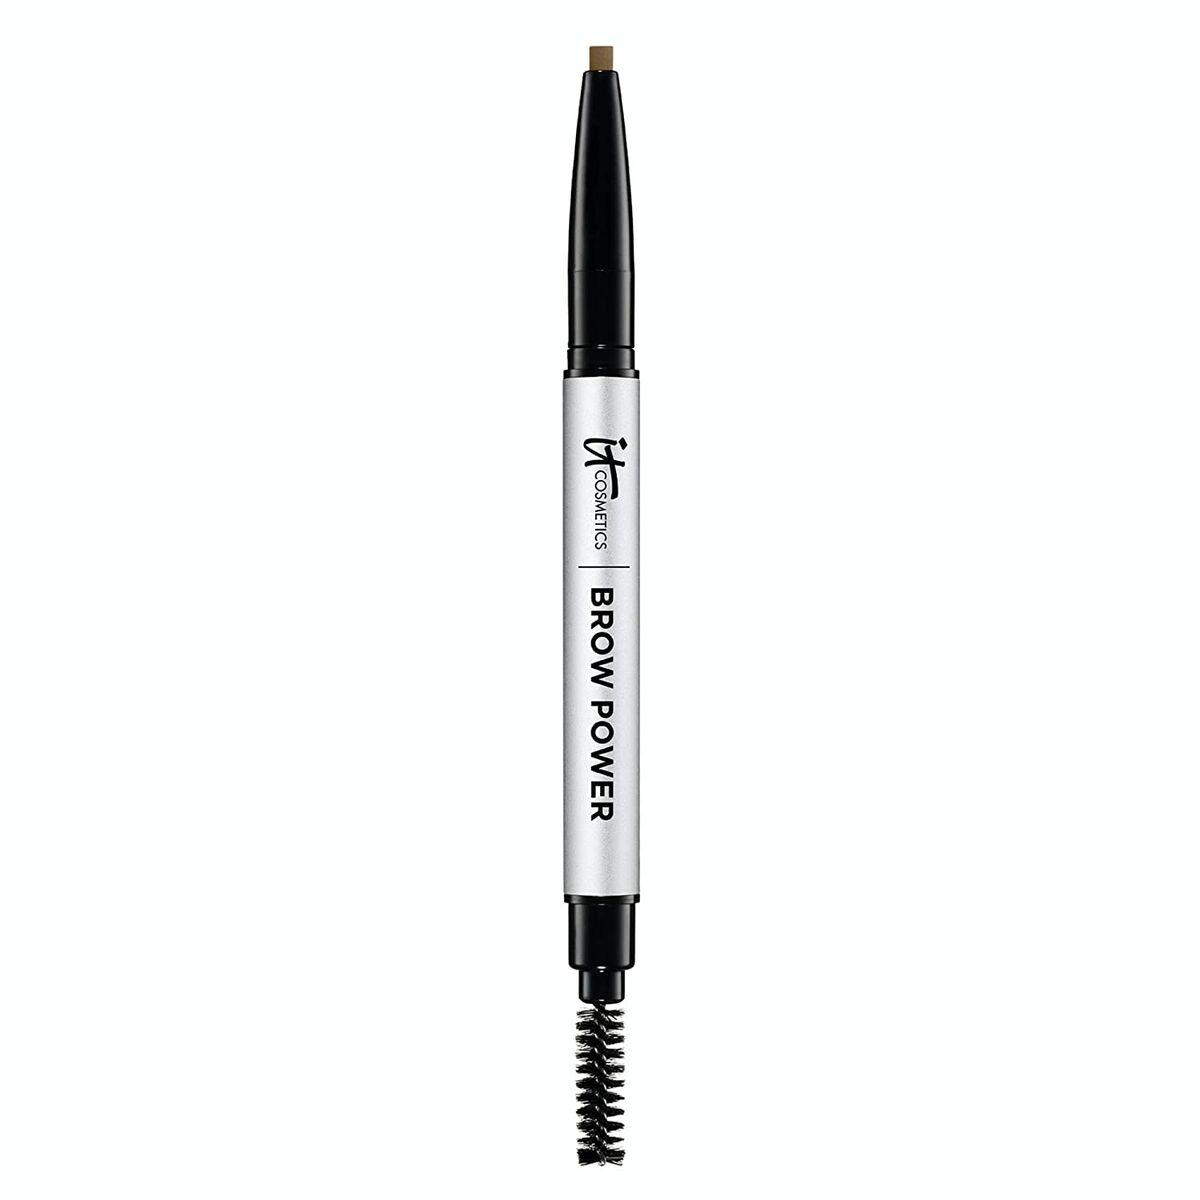 Eyebrow Pencil It Cosmetics Brow Power Universal Blonde 2-in-1 16 g-0